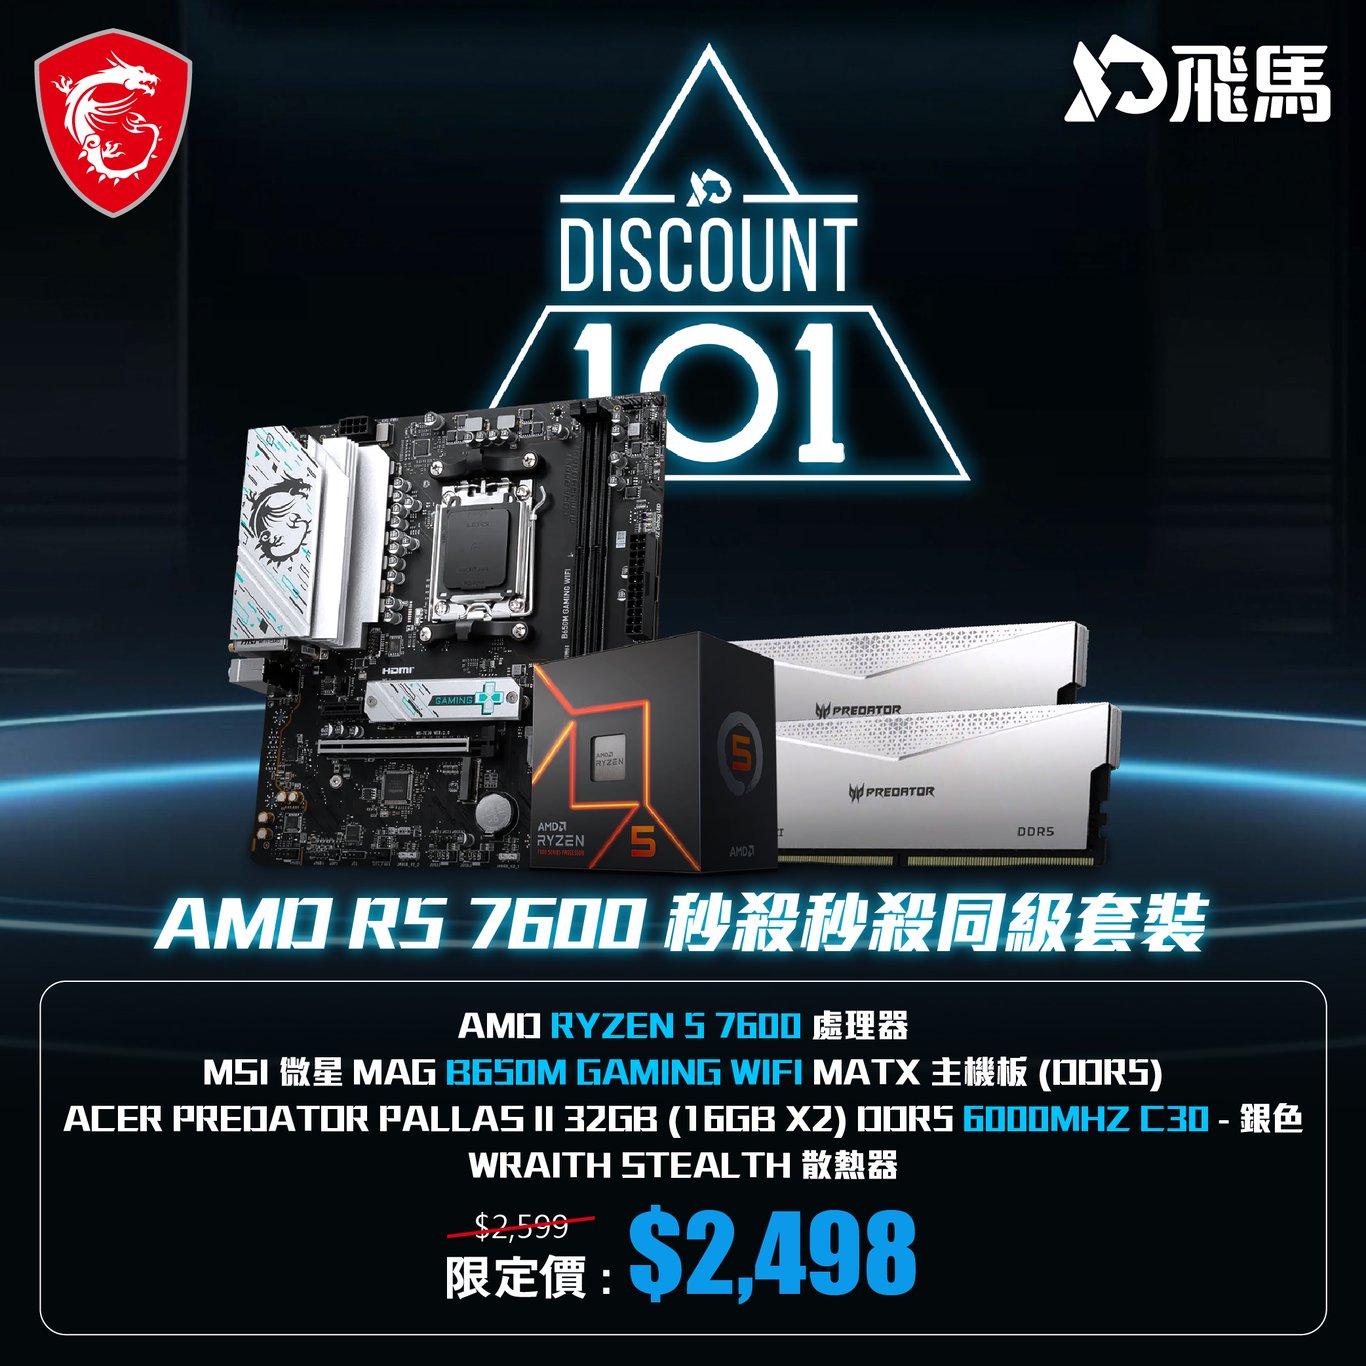 MSI AMD R5 7600 秒殺「秒殺同級」套裝